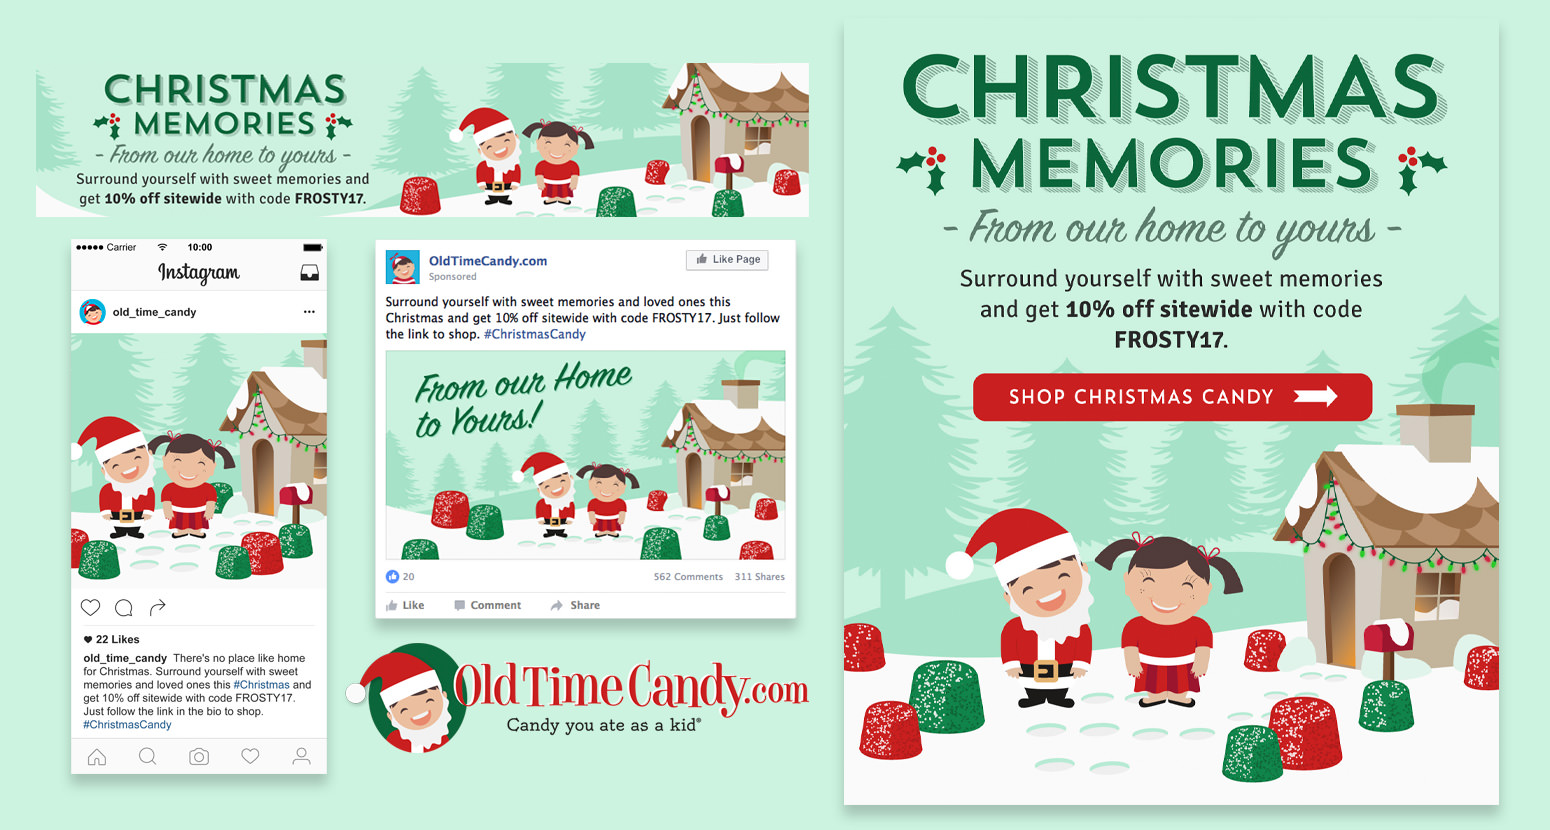 A Christmas promotional campaign for OldTimeCandy.com.